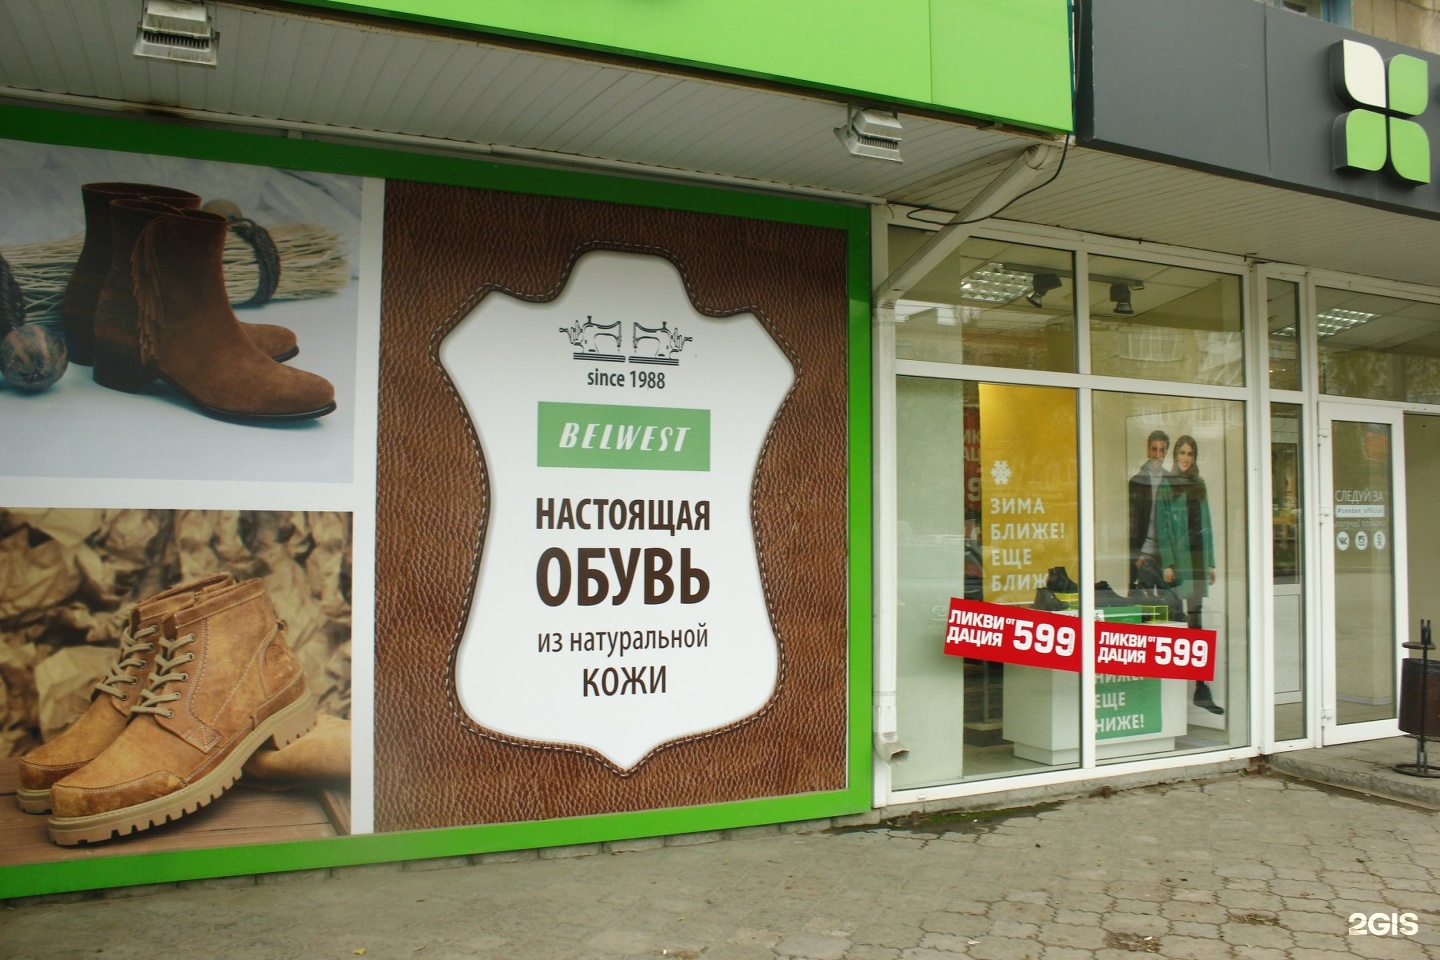 Магазин Зенден В Архангельске